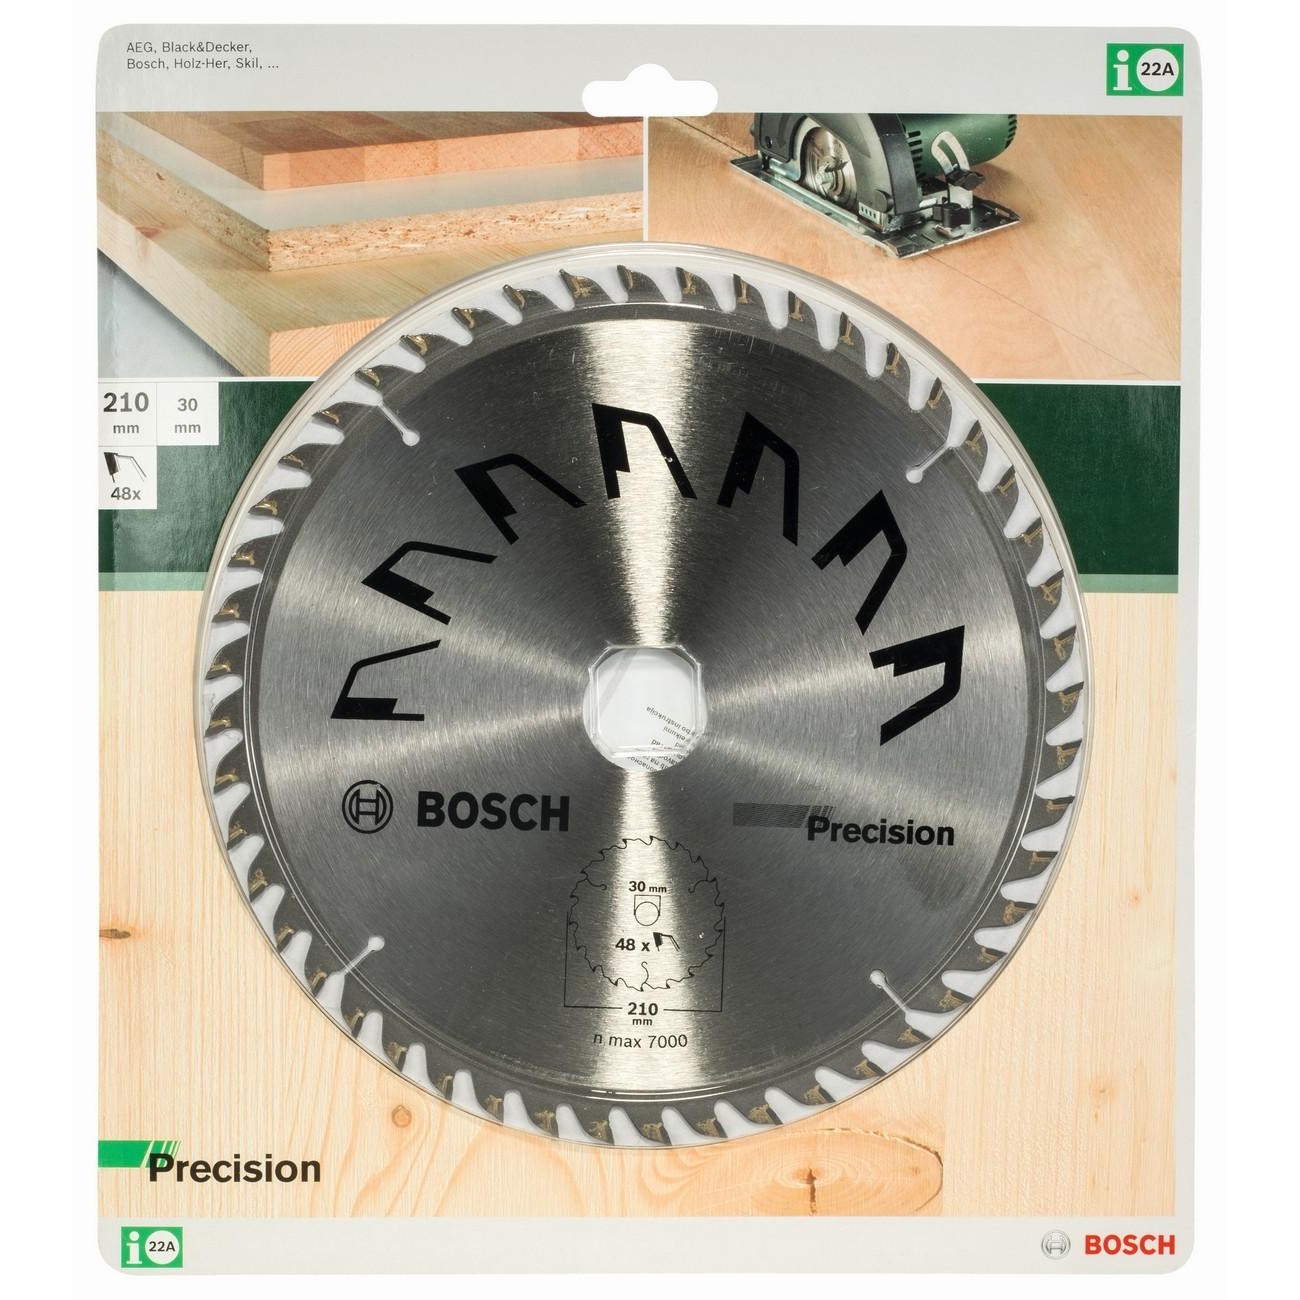 BOSCH Professional Precision Циркулярен диск 210x30x3 мм 48 зъби (2609256873)